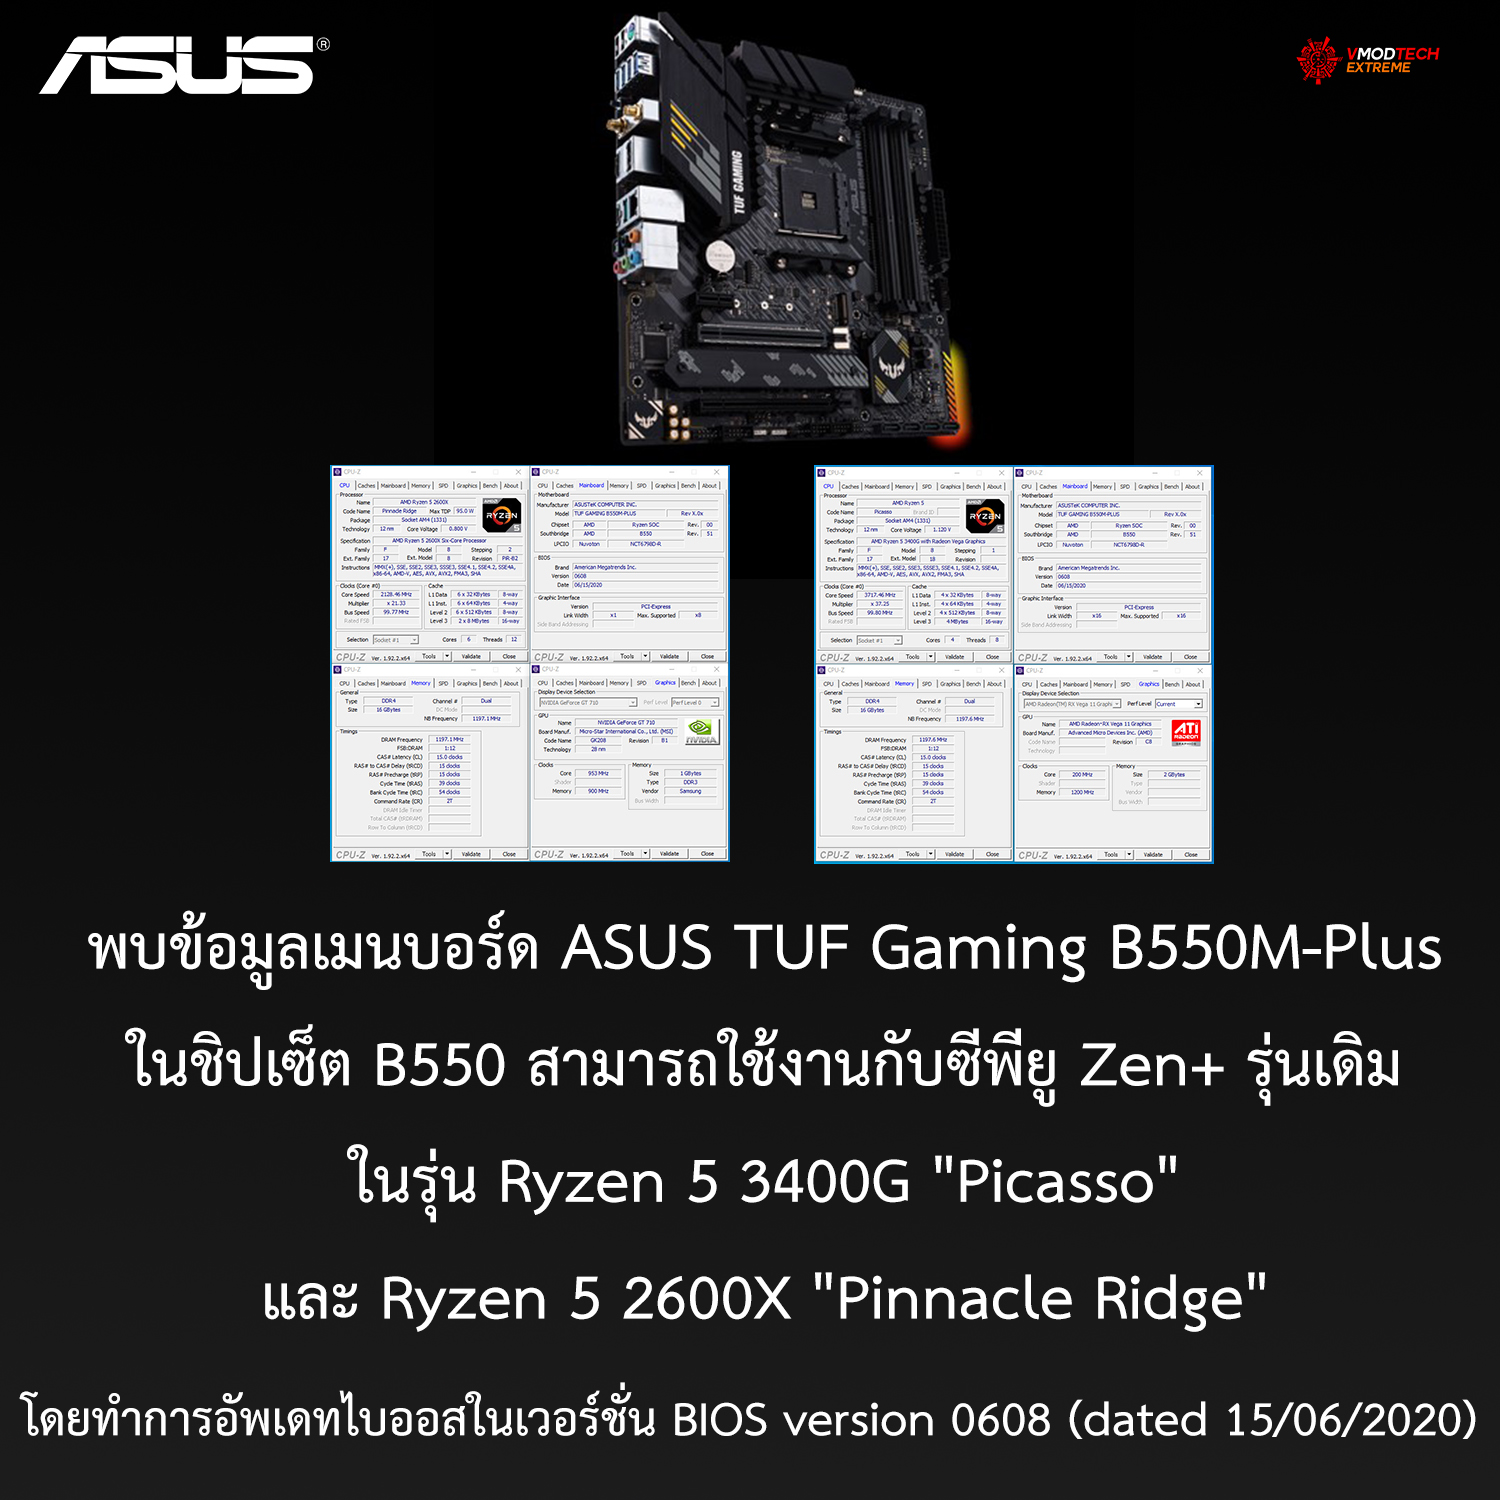 asus tuf gaming b550m plus bios update zen1 พบข้อมูลเมนบอร์ด AMD B550 สามารถใช้งานกับซีพียู Zen+ ในรุ่น Ryzen 5 3400G Picasso และ Ryzen 5 2600X Pinnacle Ridge 